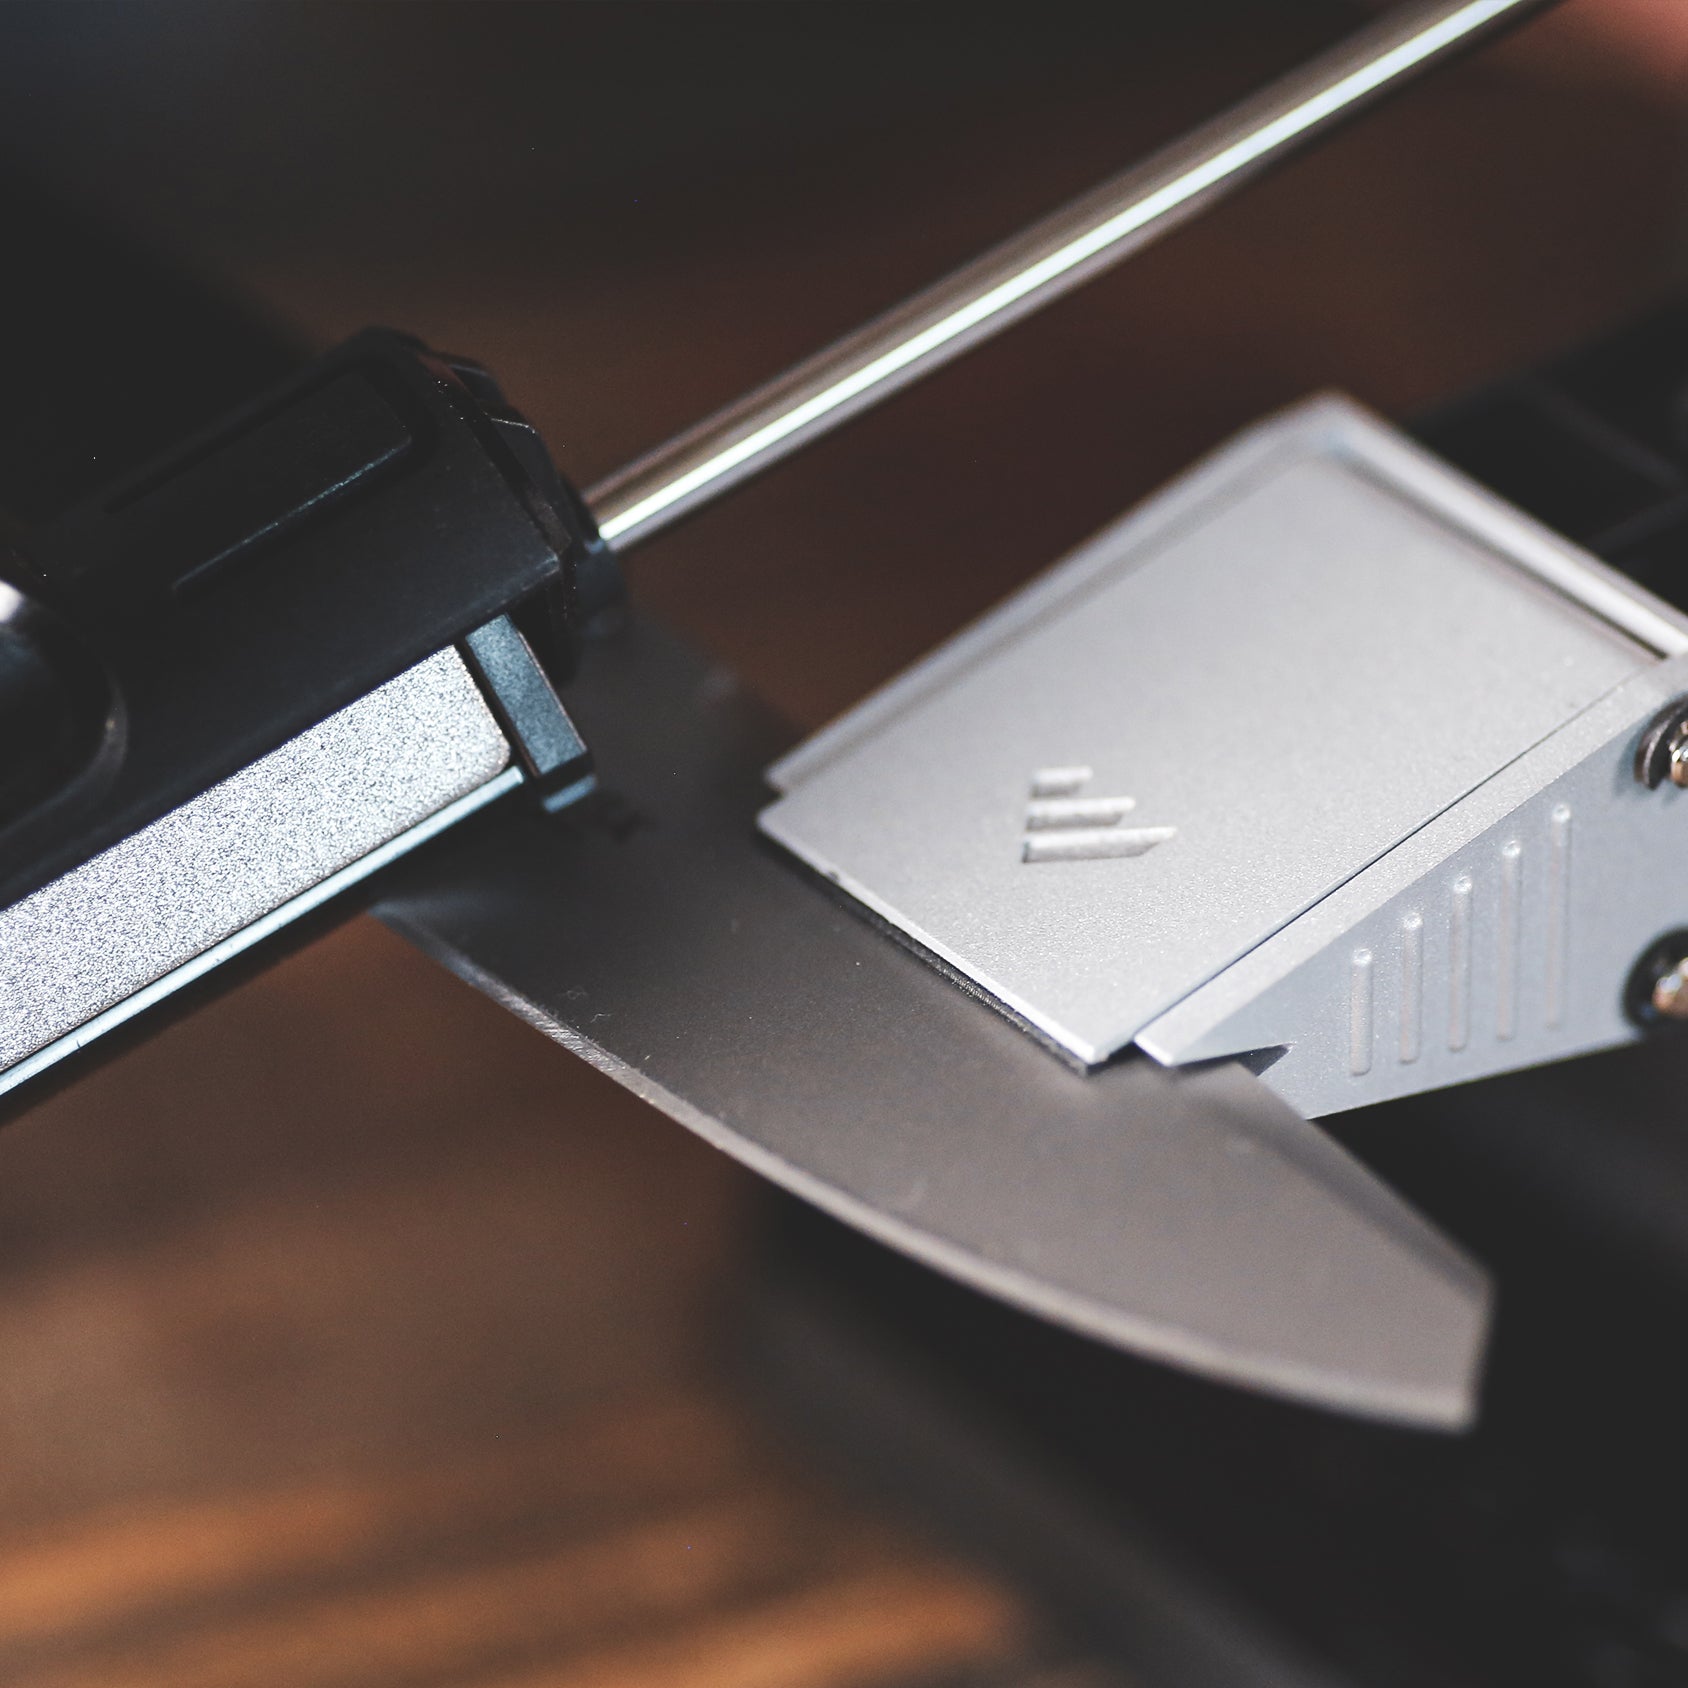 Precision Adjust Knife Sharpener™ - Work Sharp Sharpeners